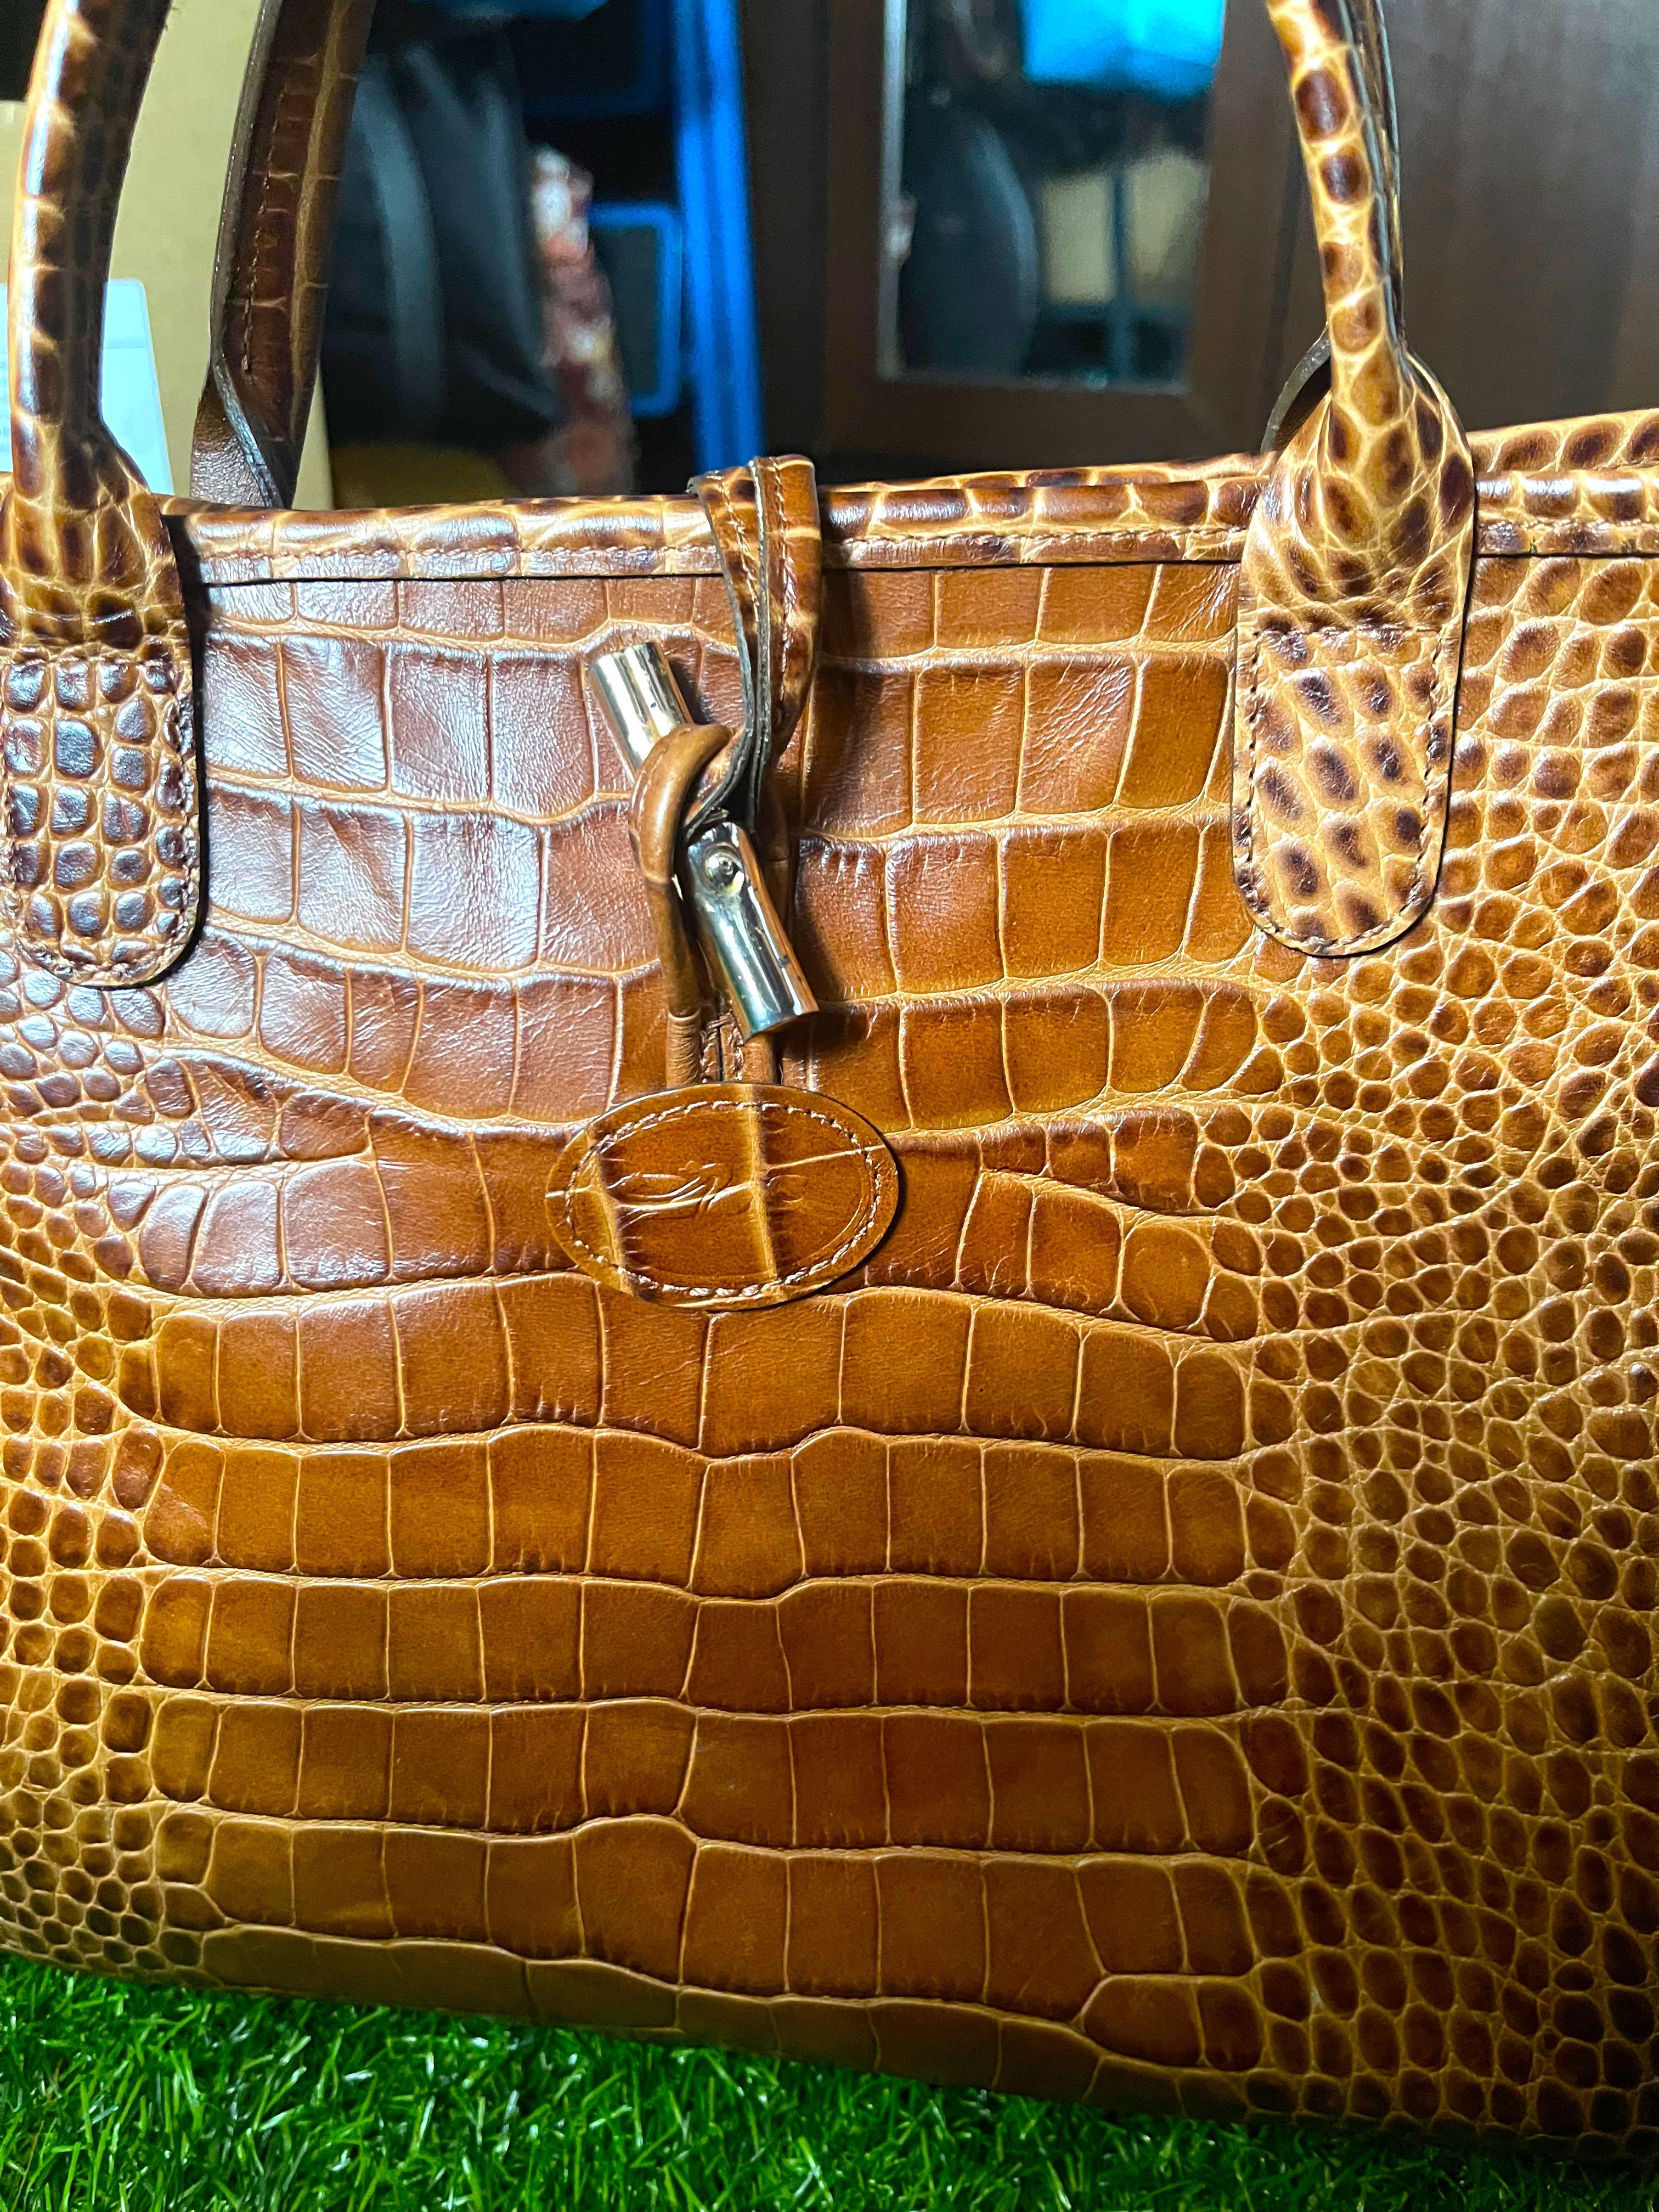 Longchamp Roseau Crocodile Embossed Leather Tote in Orange